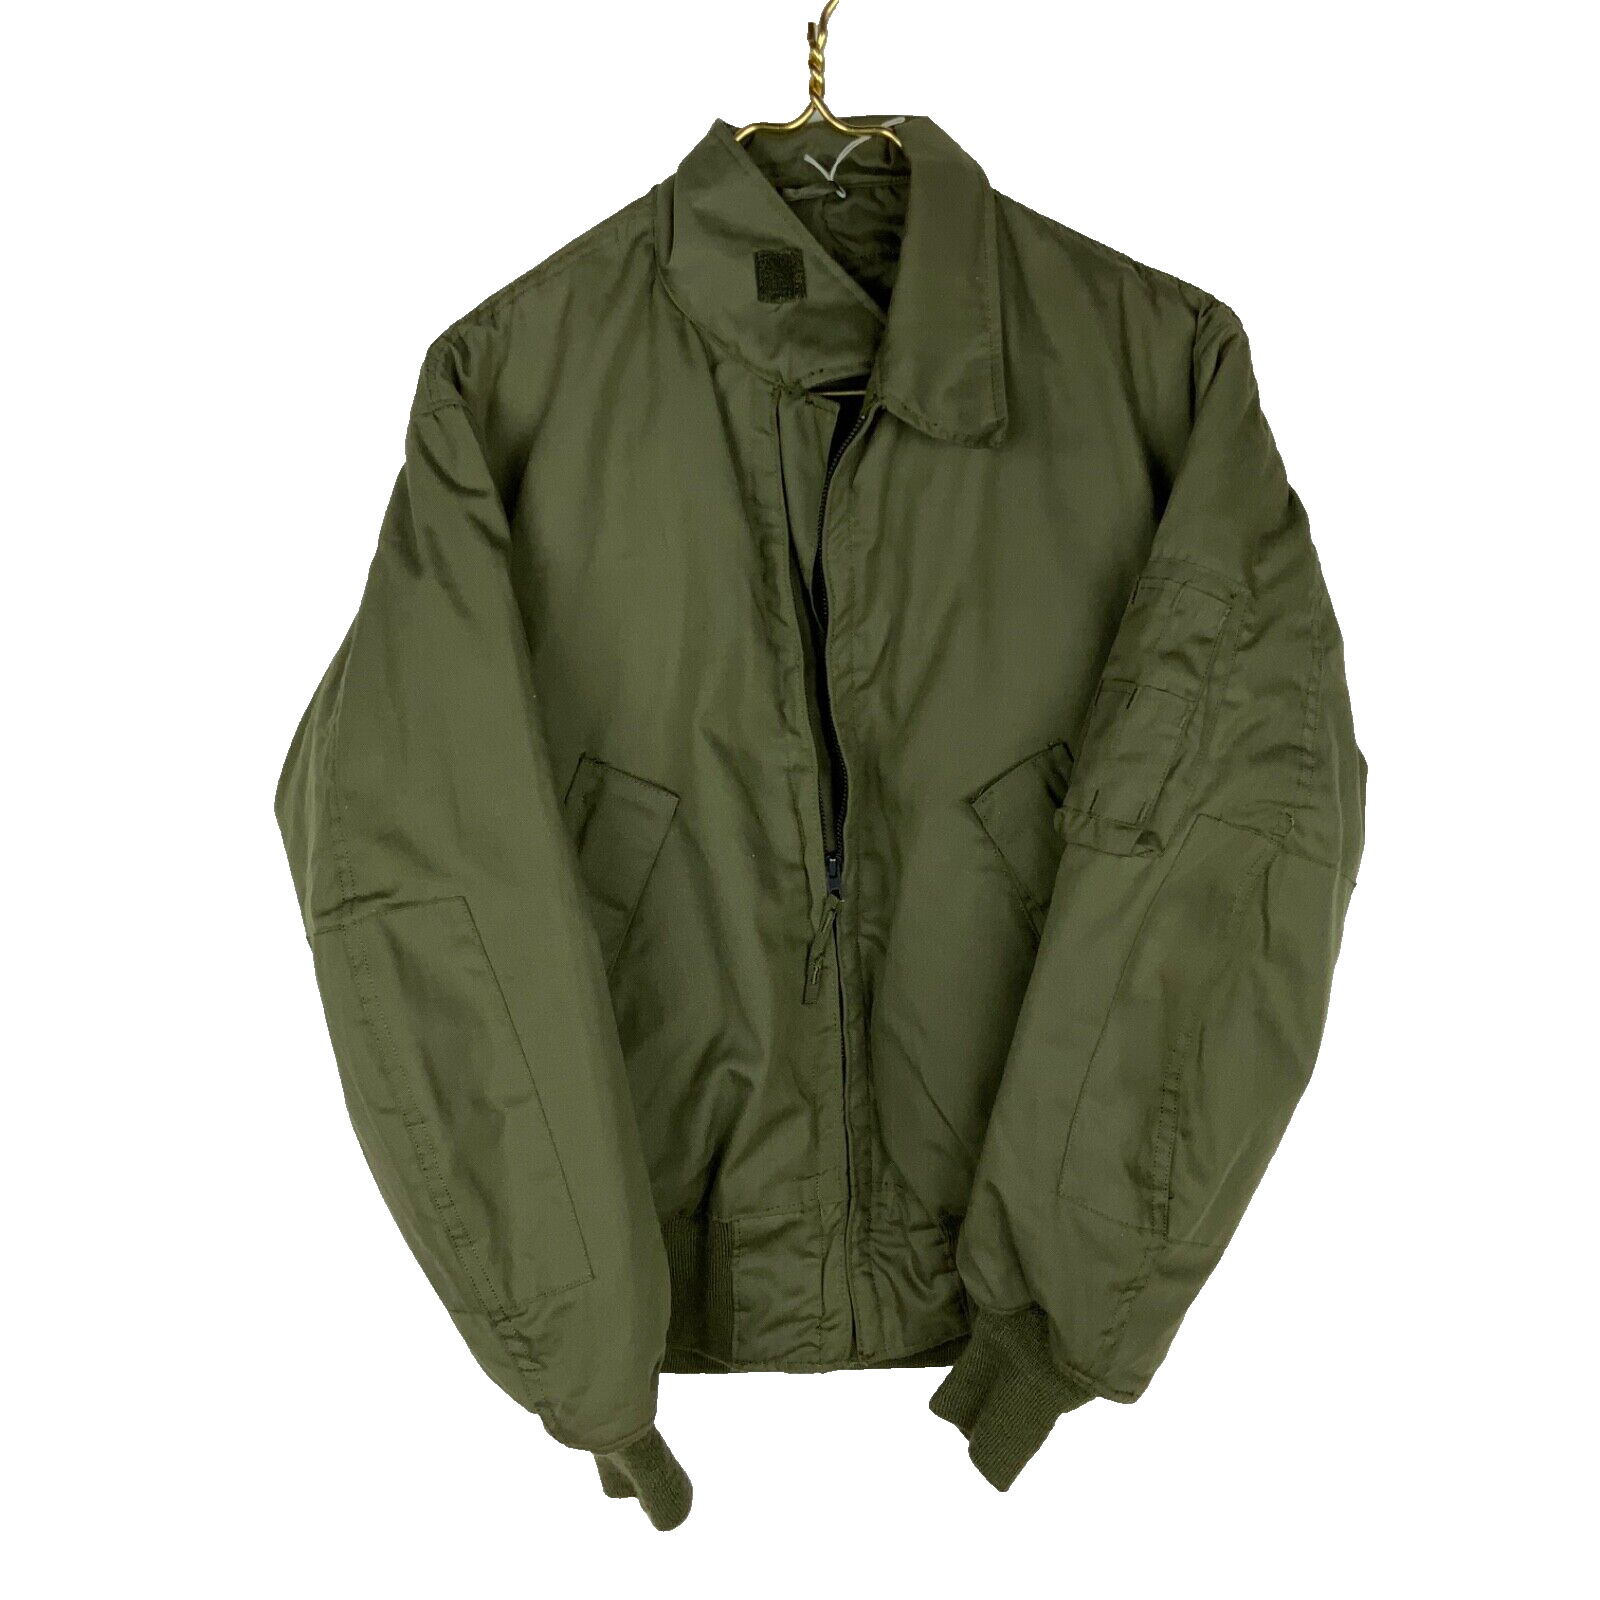 Vintage Us Military Avirex Cold Weather High Temp Jacket Size Medium Green 1985